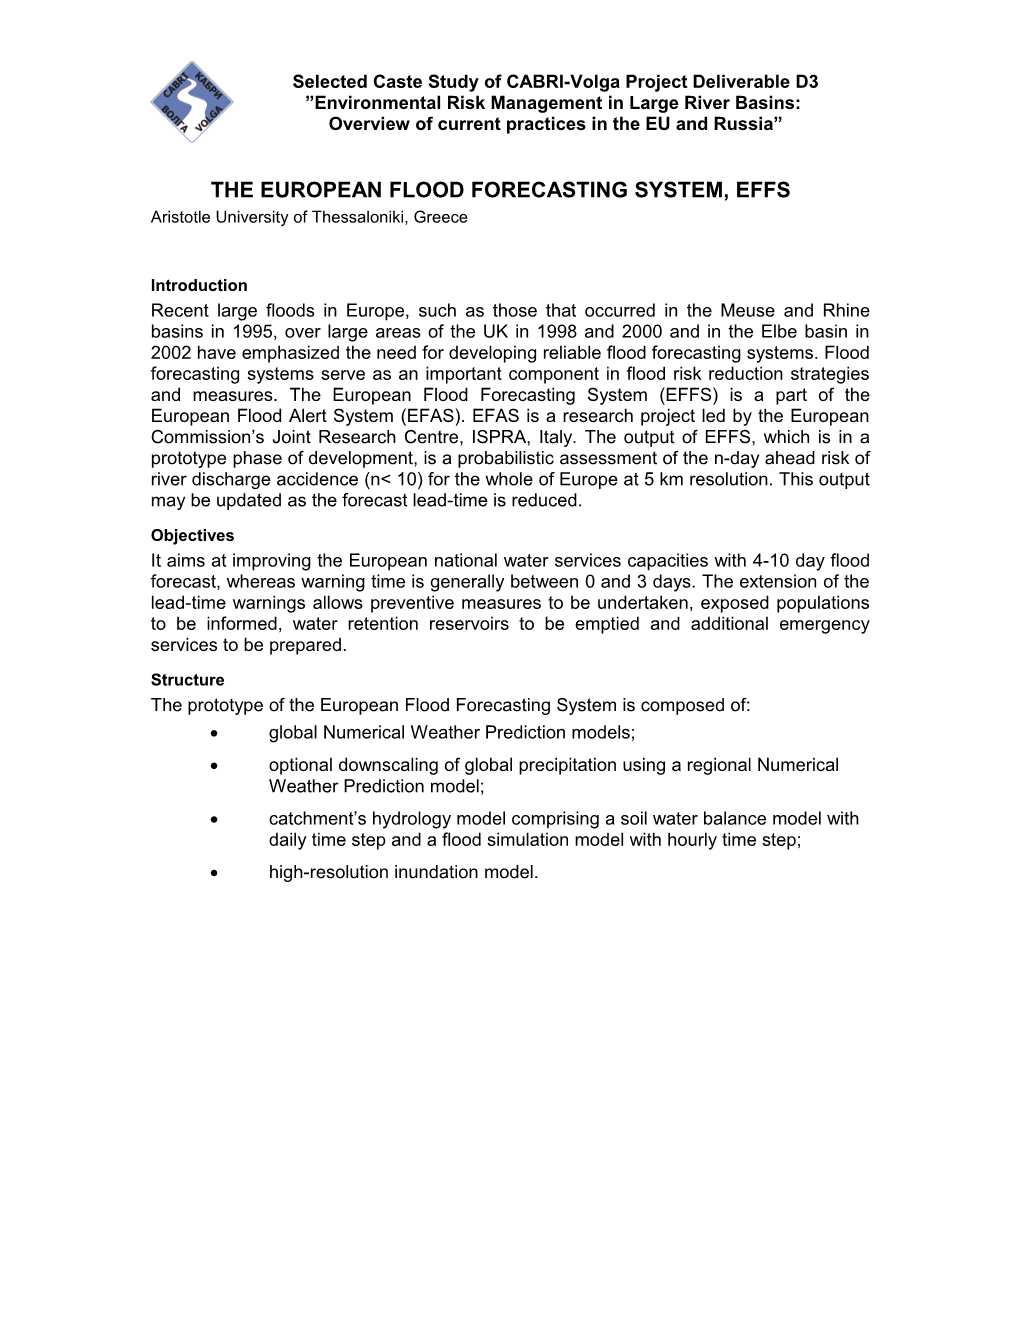 The European Flood Forecasting System, Effs